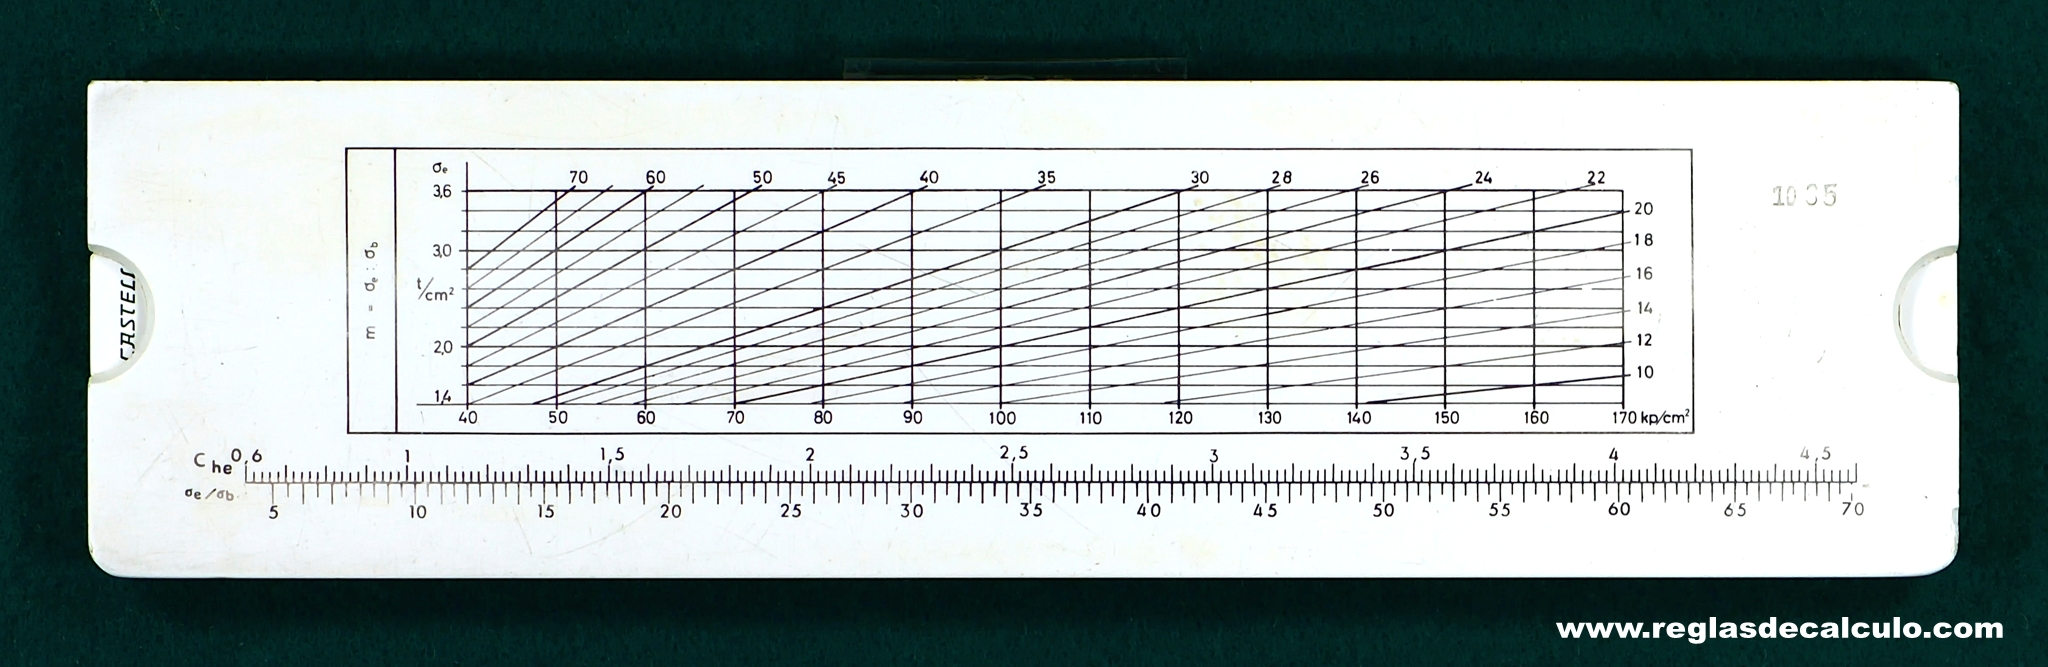 Faber Castell 67/21 Stahlbeton Regla de Calculo Slide rule